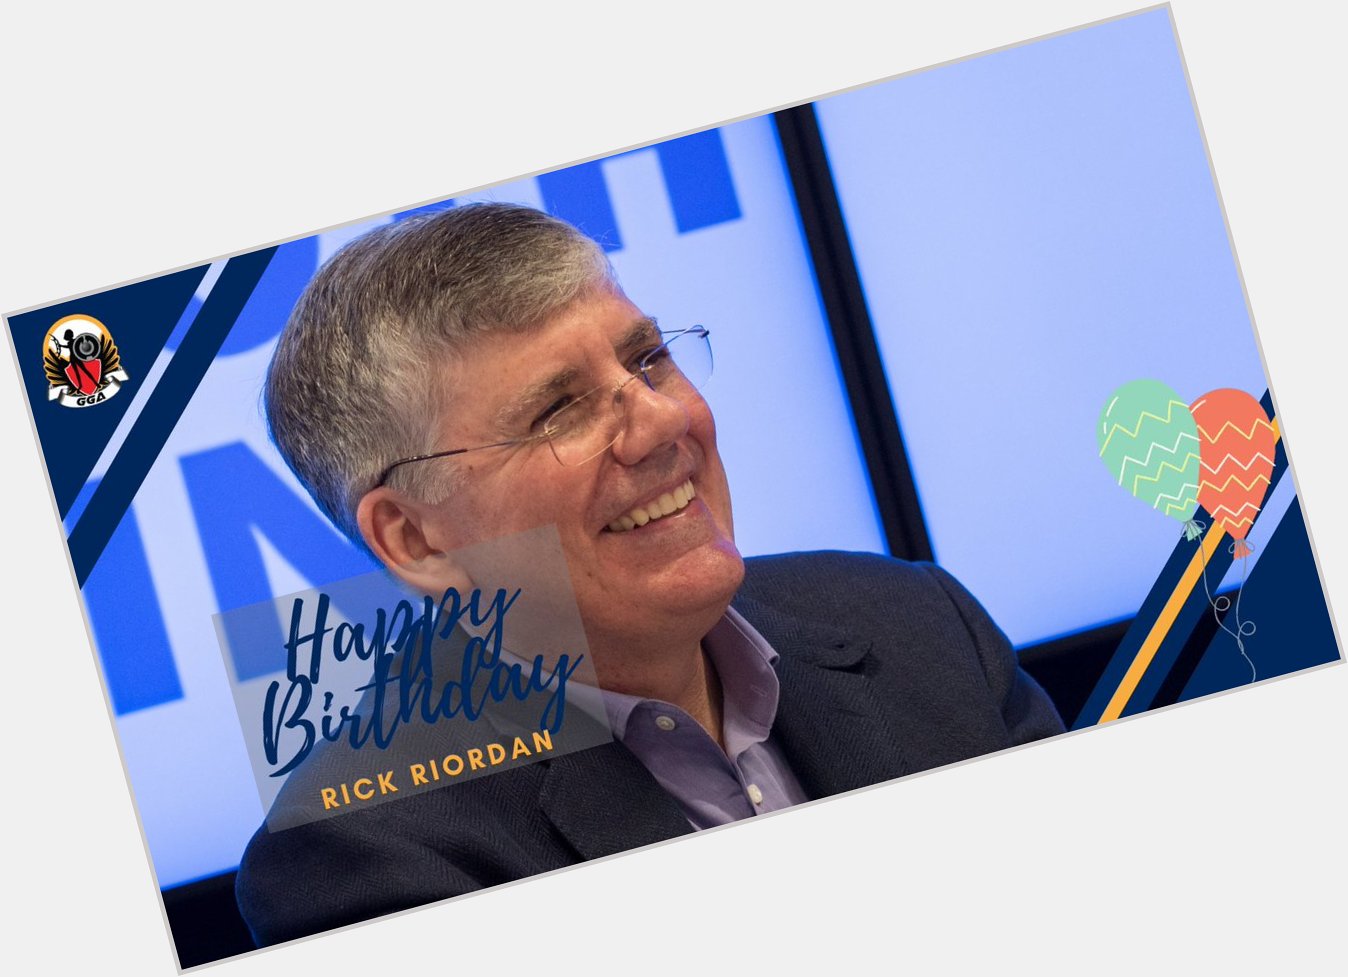 Happy Birthday to Rick Riordan, author of the Percy Jackson & the Olympians series!  